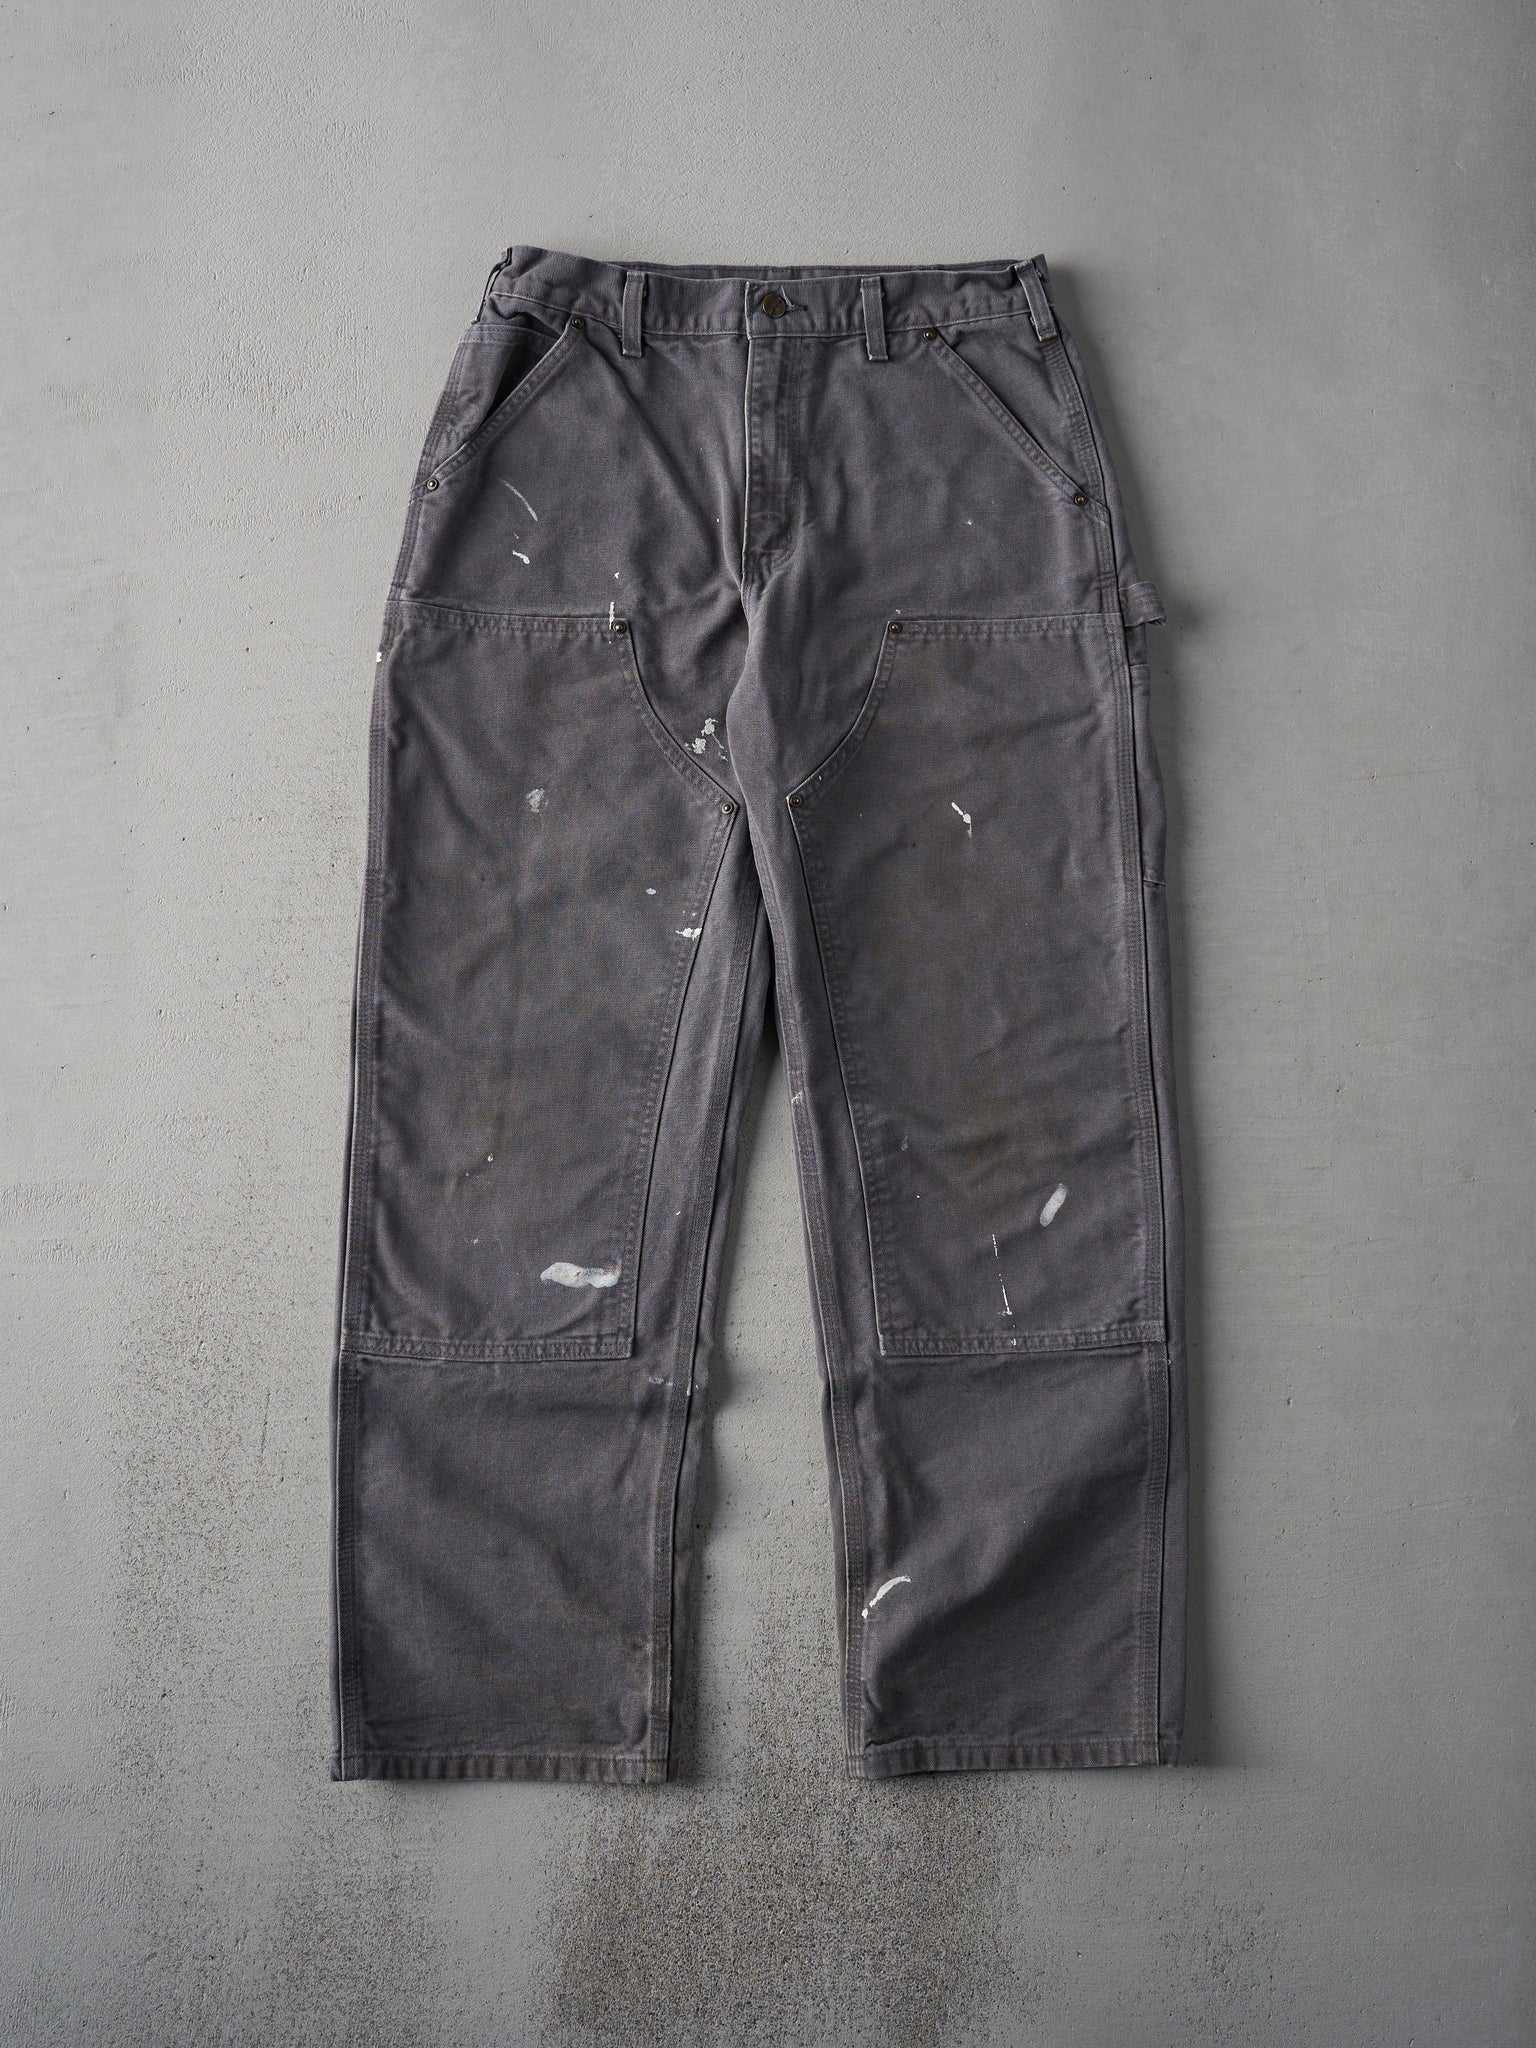 Vintage 90s Grey Dungaree Fit Carhartt Double Knee Carpenter Pants (32x30)